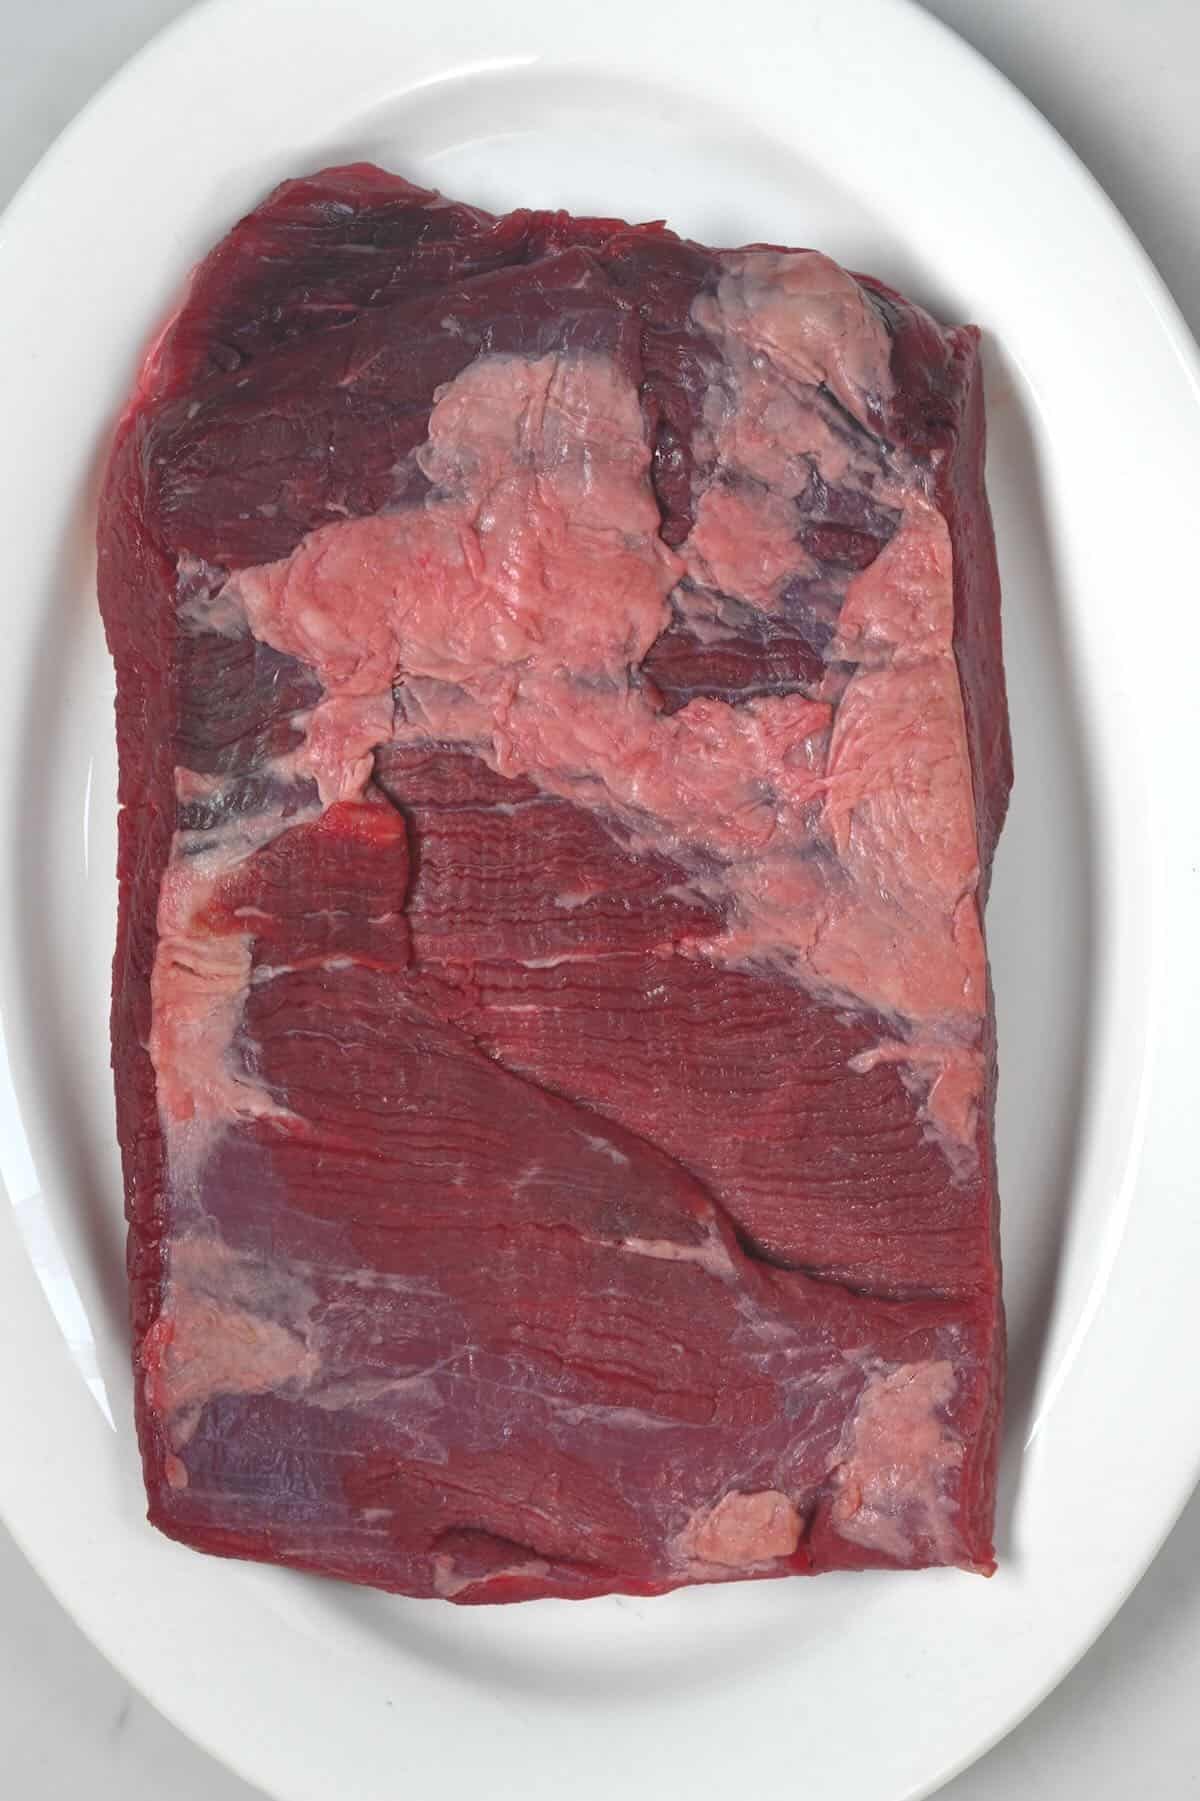 A piece of raw beef brisket